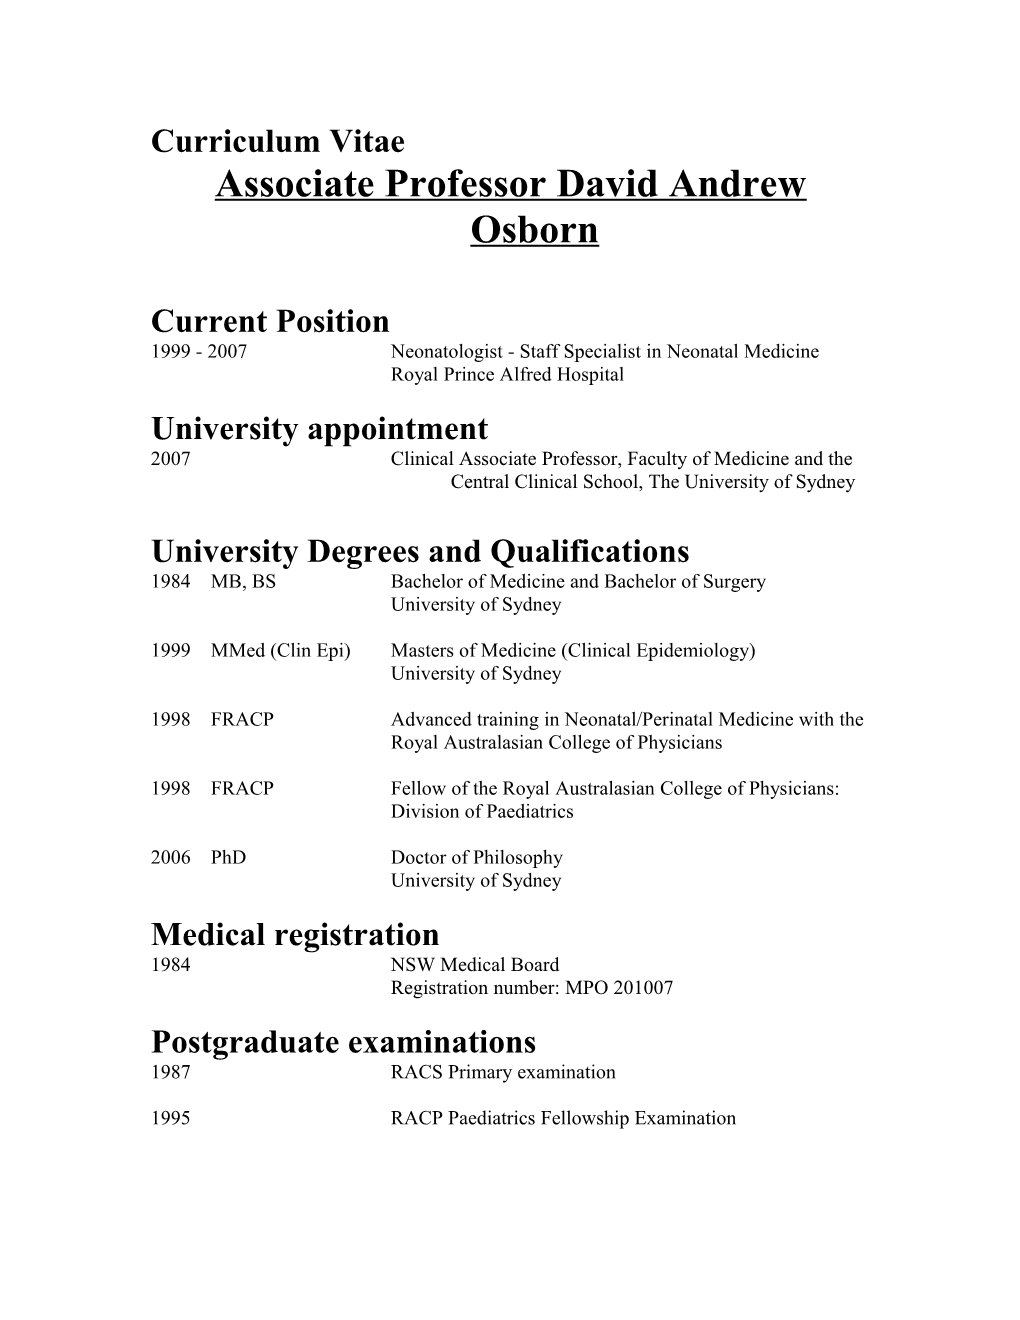 Associate Professor David Andrew Osborn